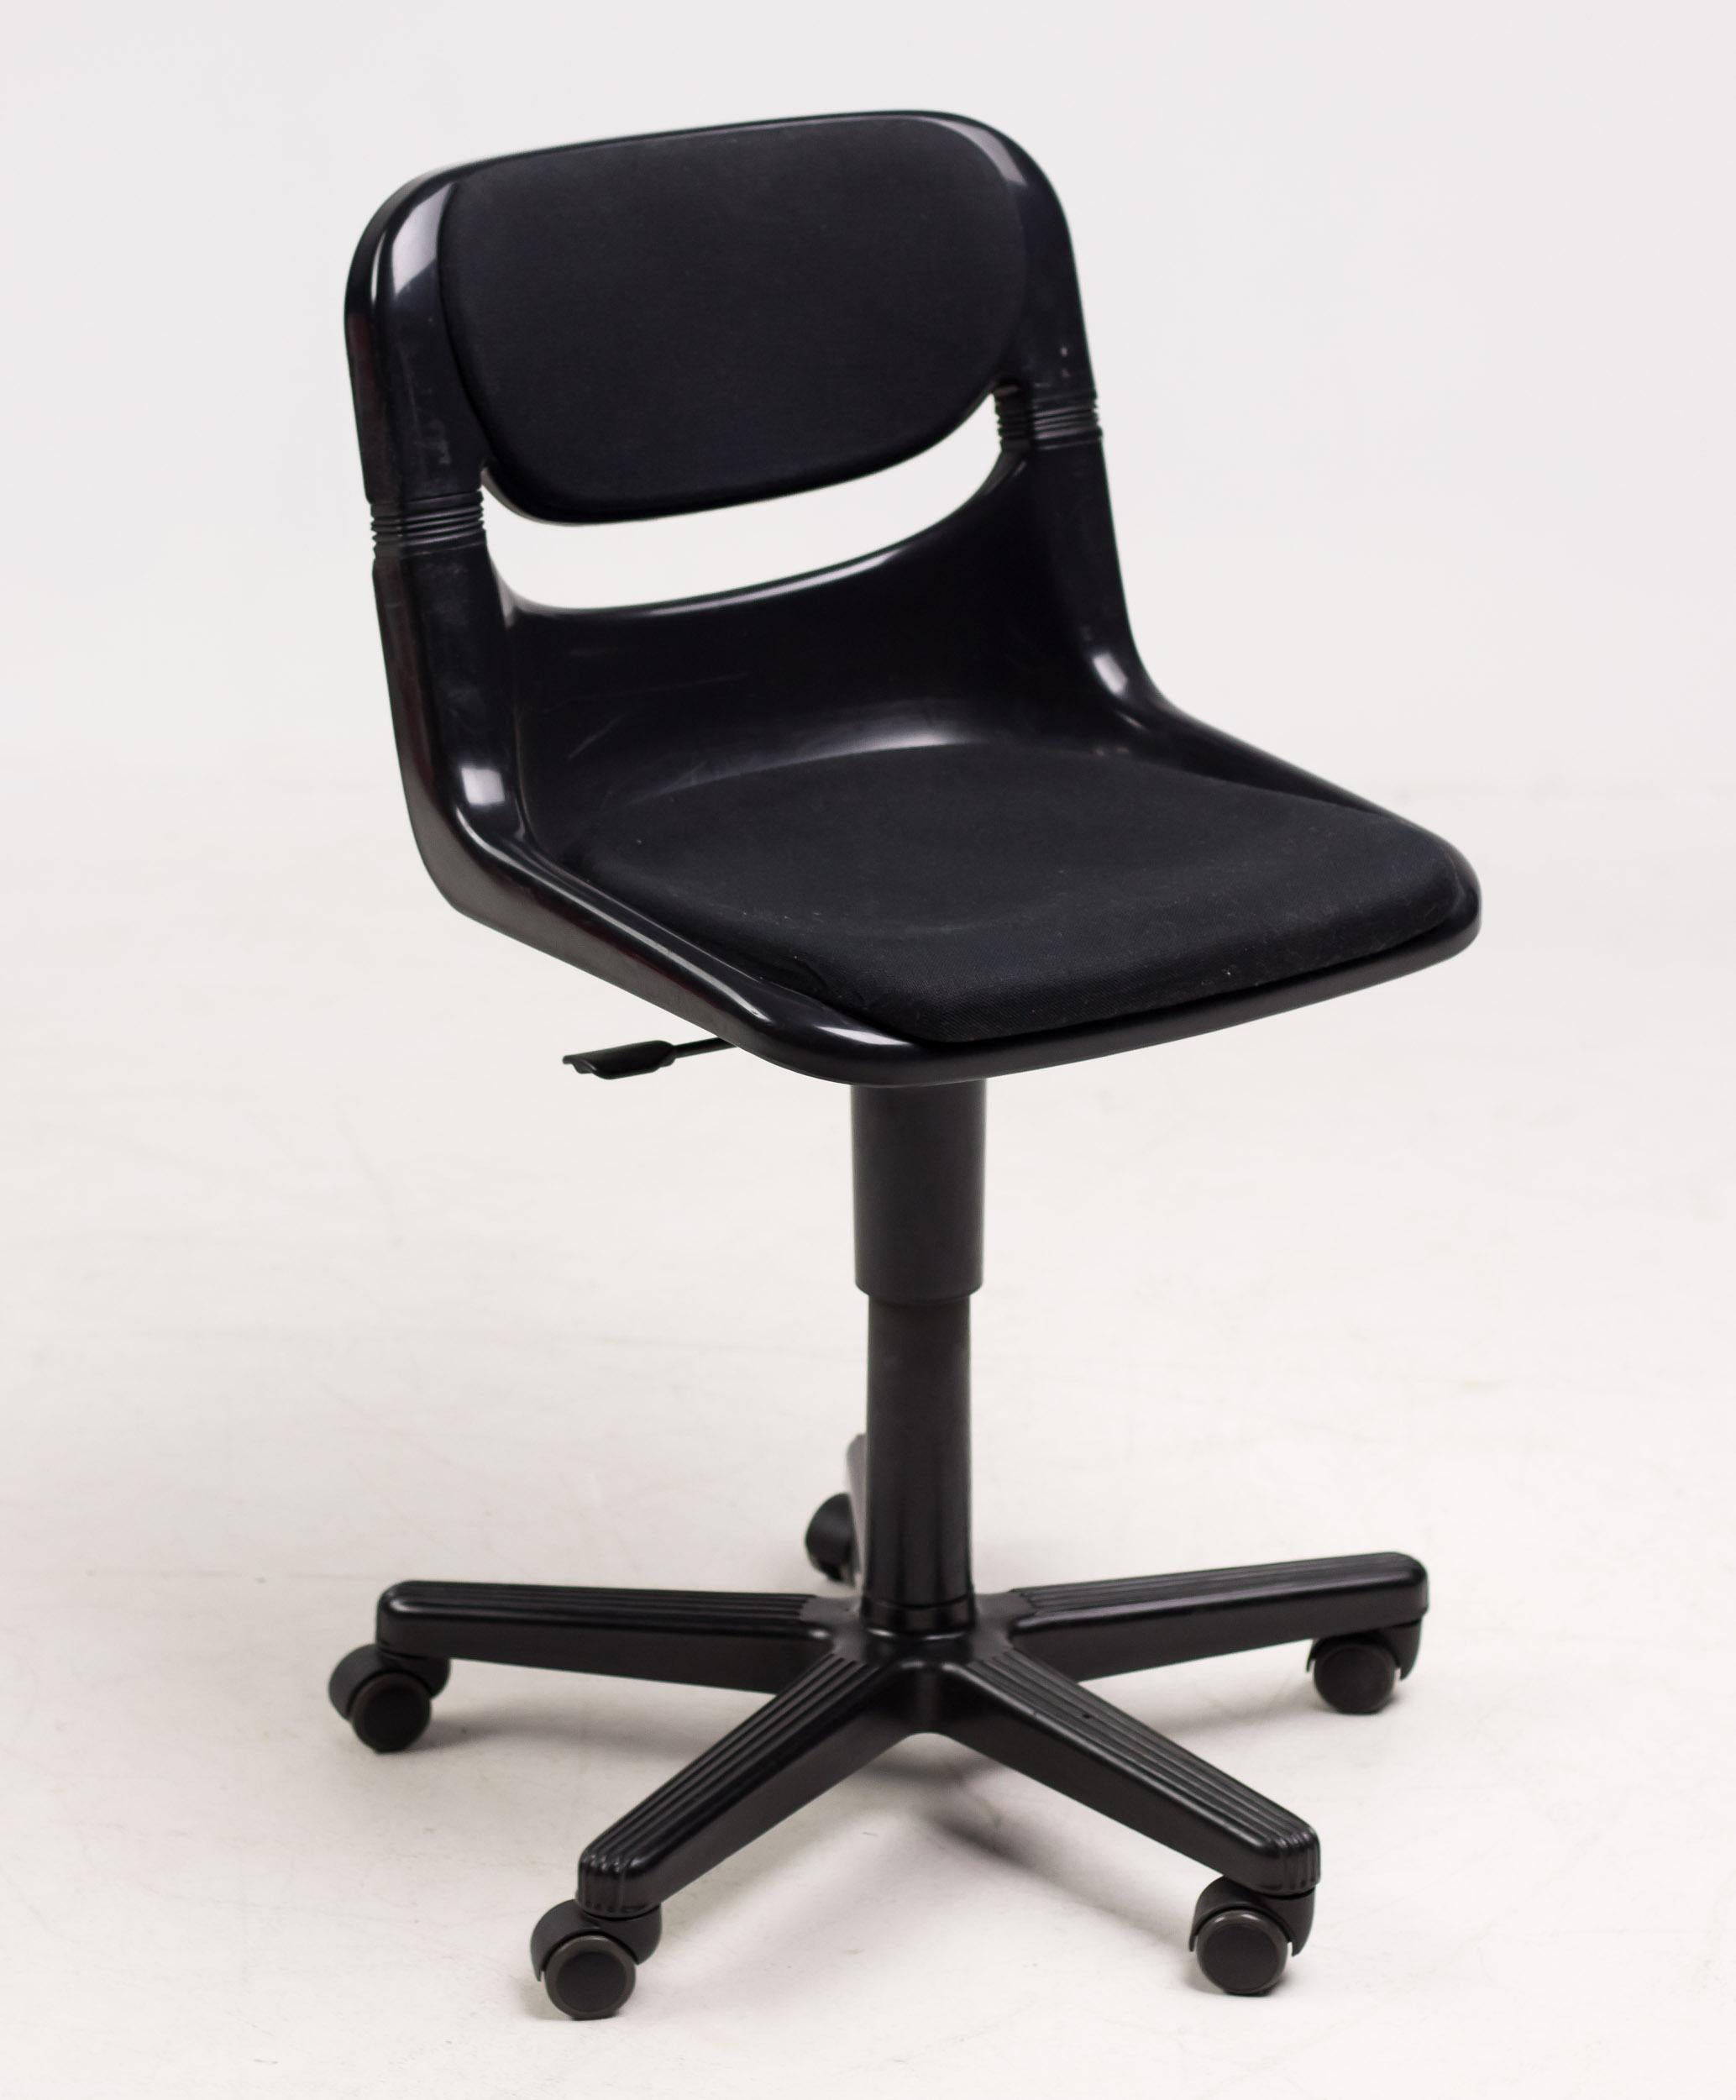 dorsal chair